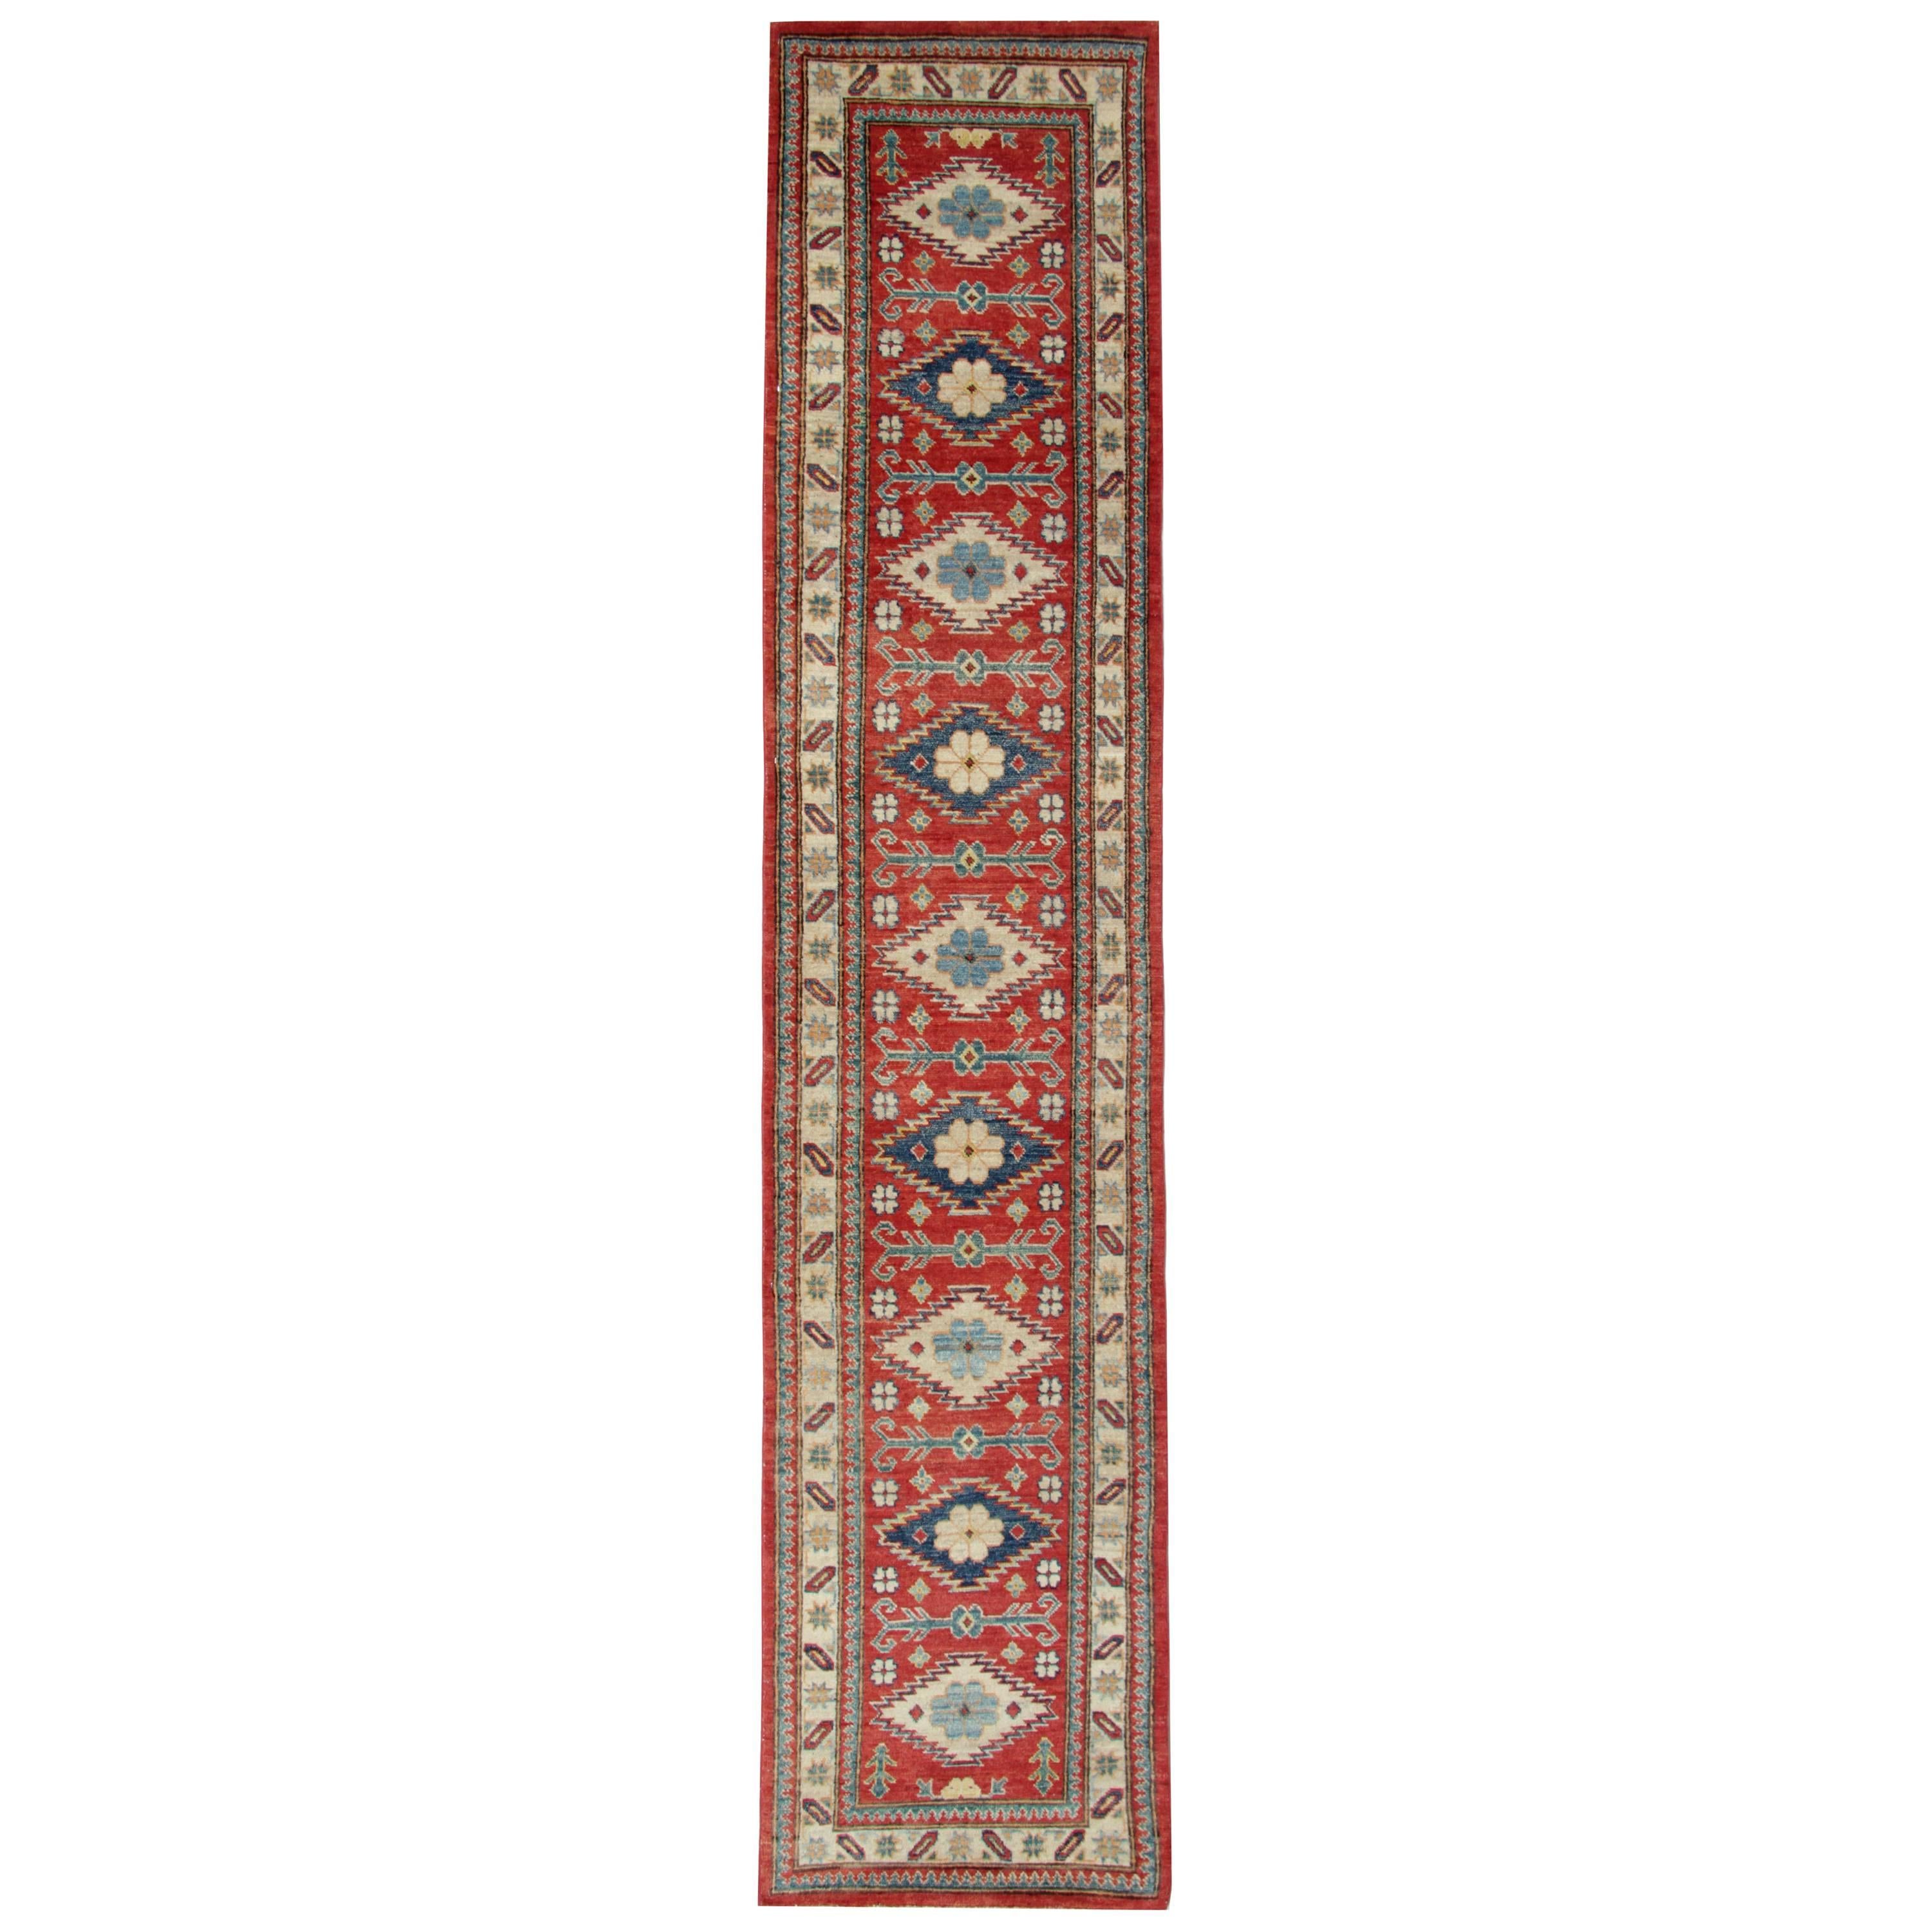 Handmade Rug New Traditional Rugs, Carpet Runners from Kazak Style Rugs